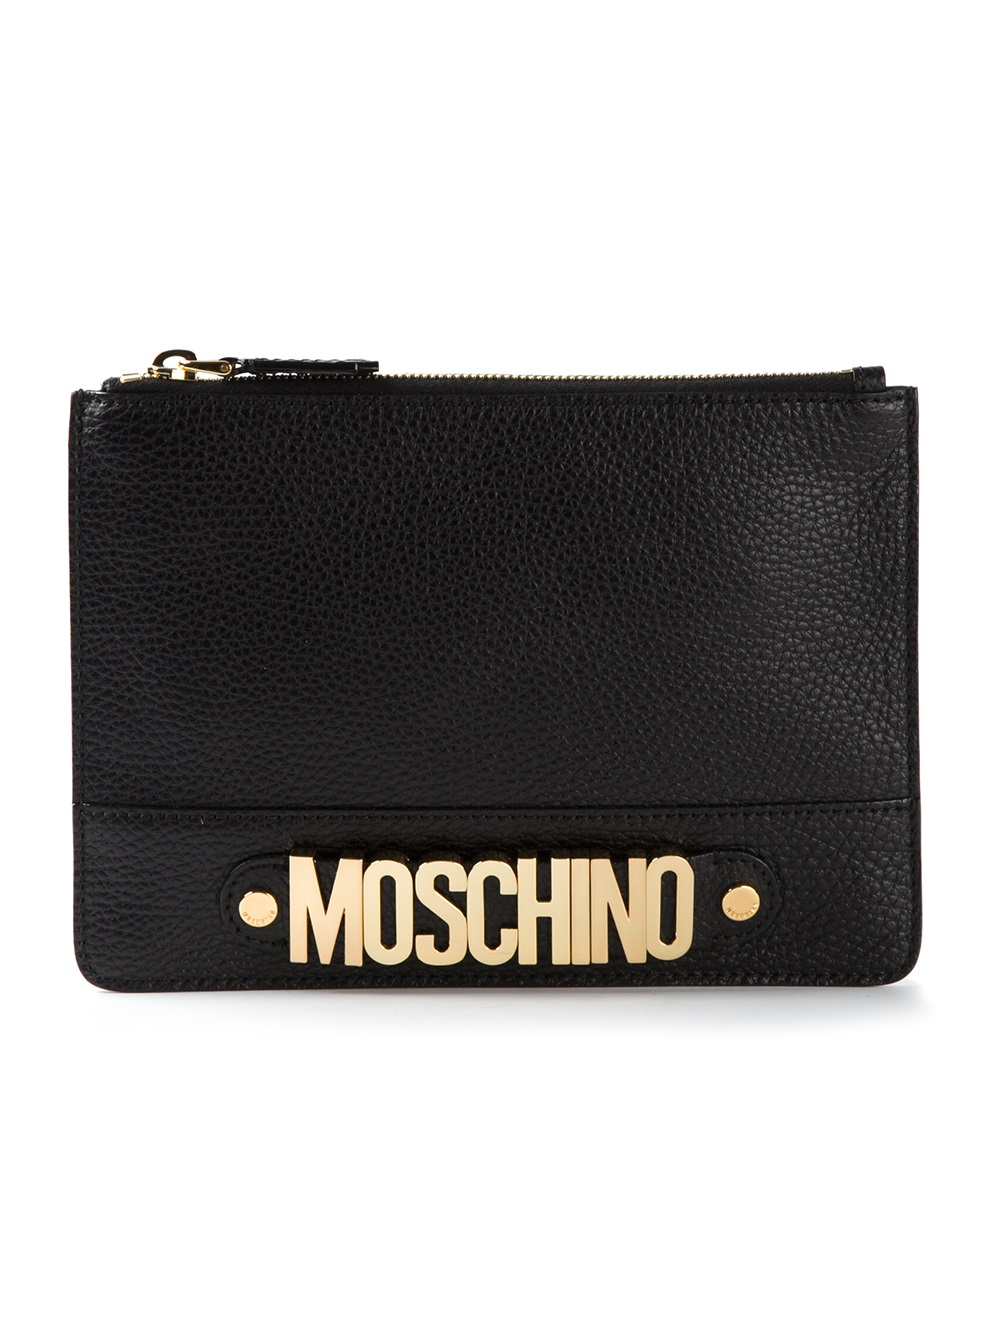 Moschino Logo Clutch in Black | Lyst